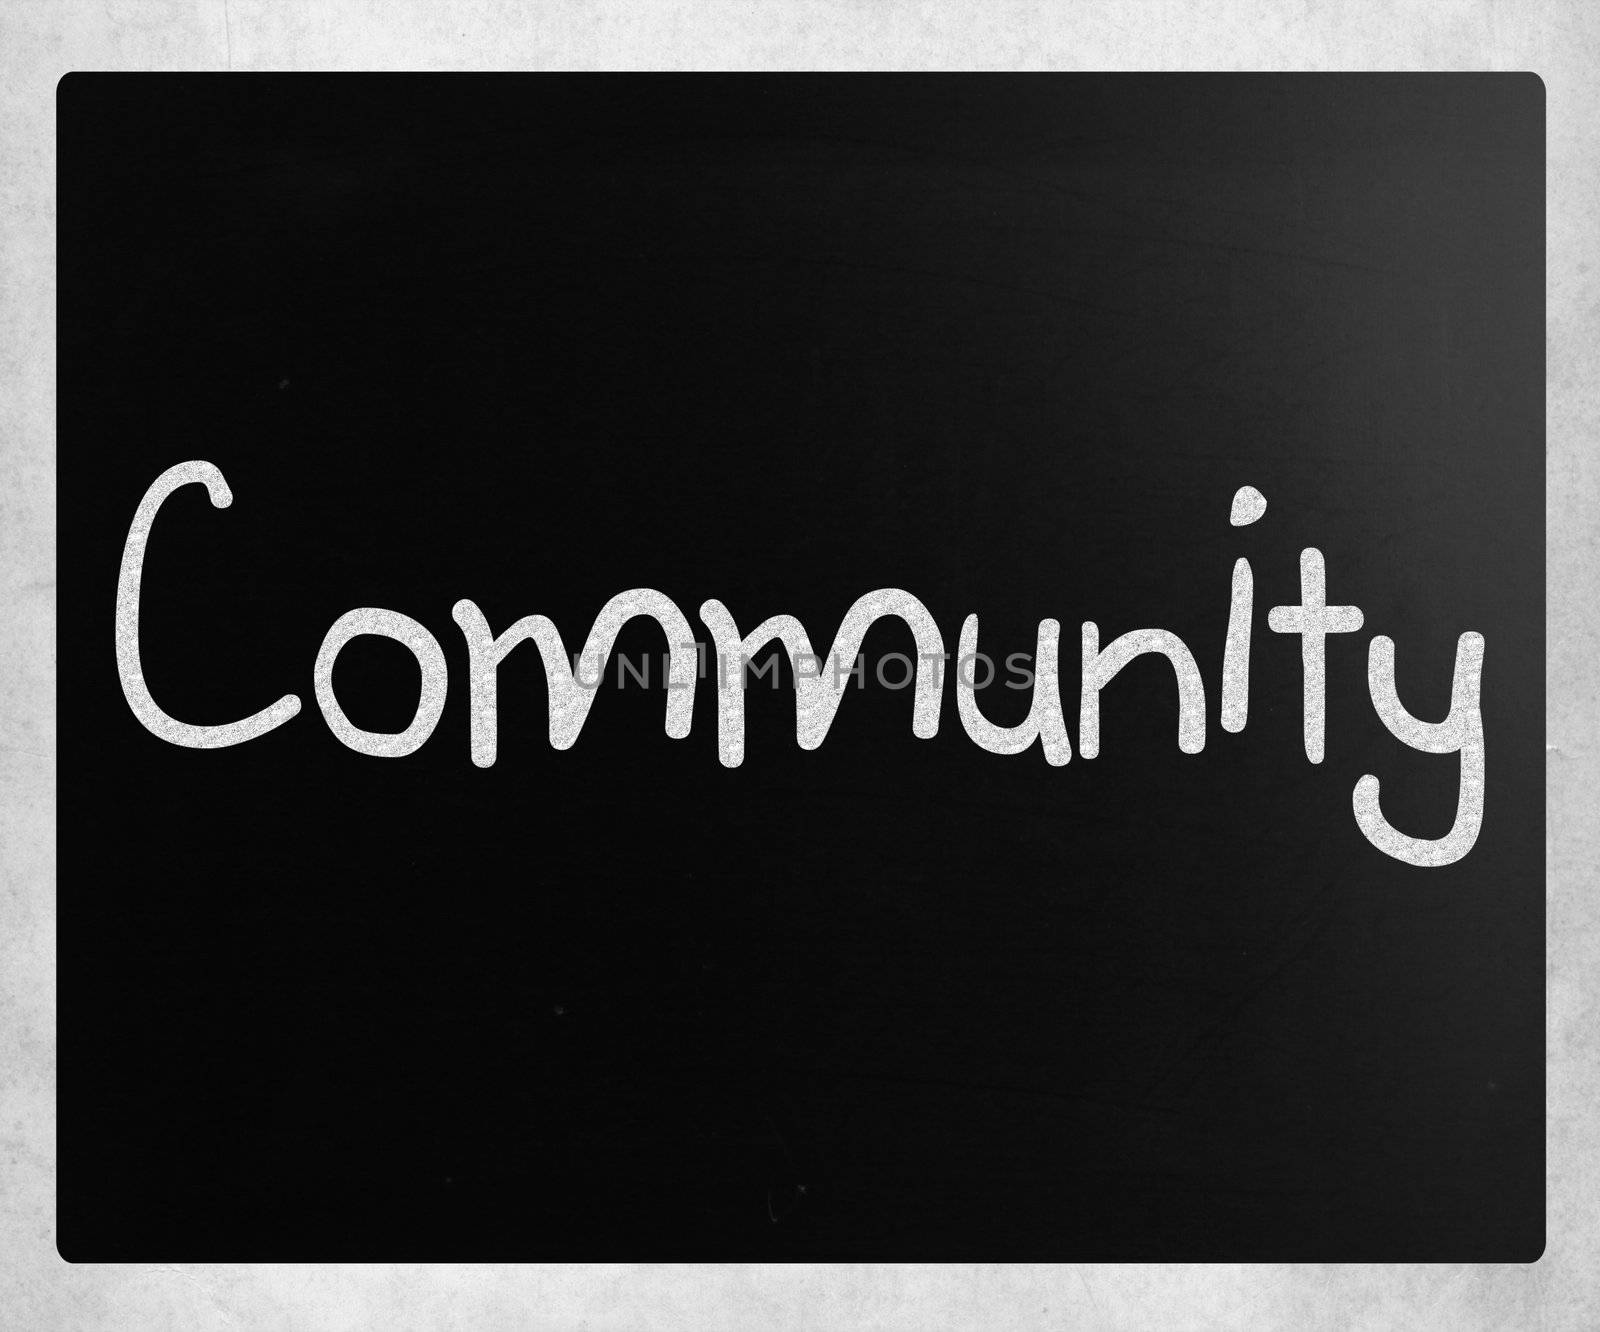 "Community" handwritten with white chalk on a blackboard